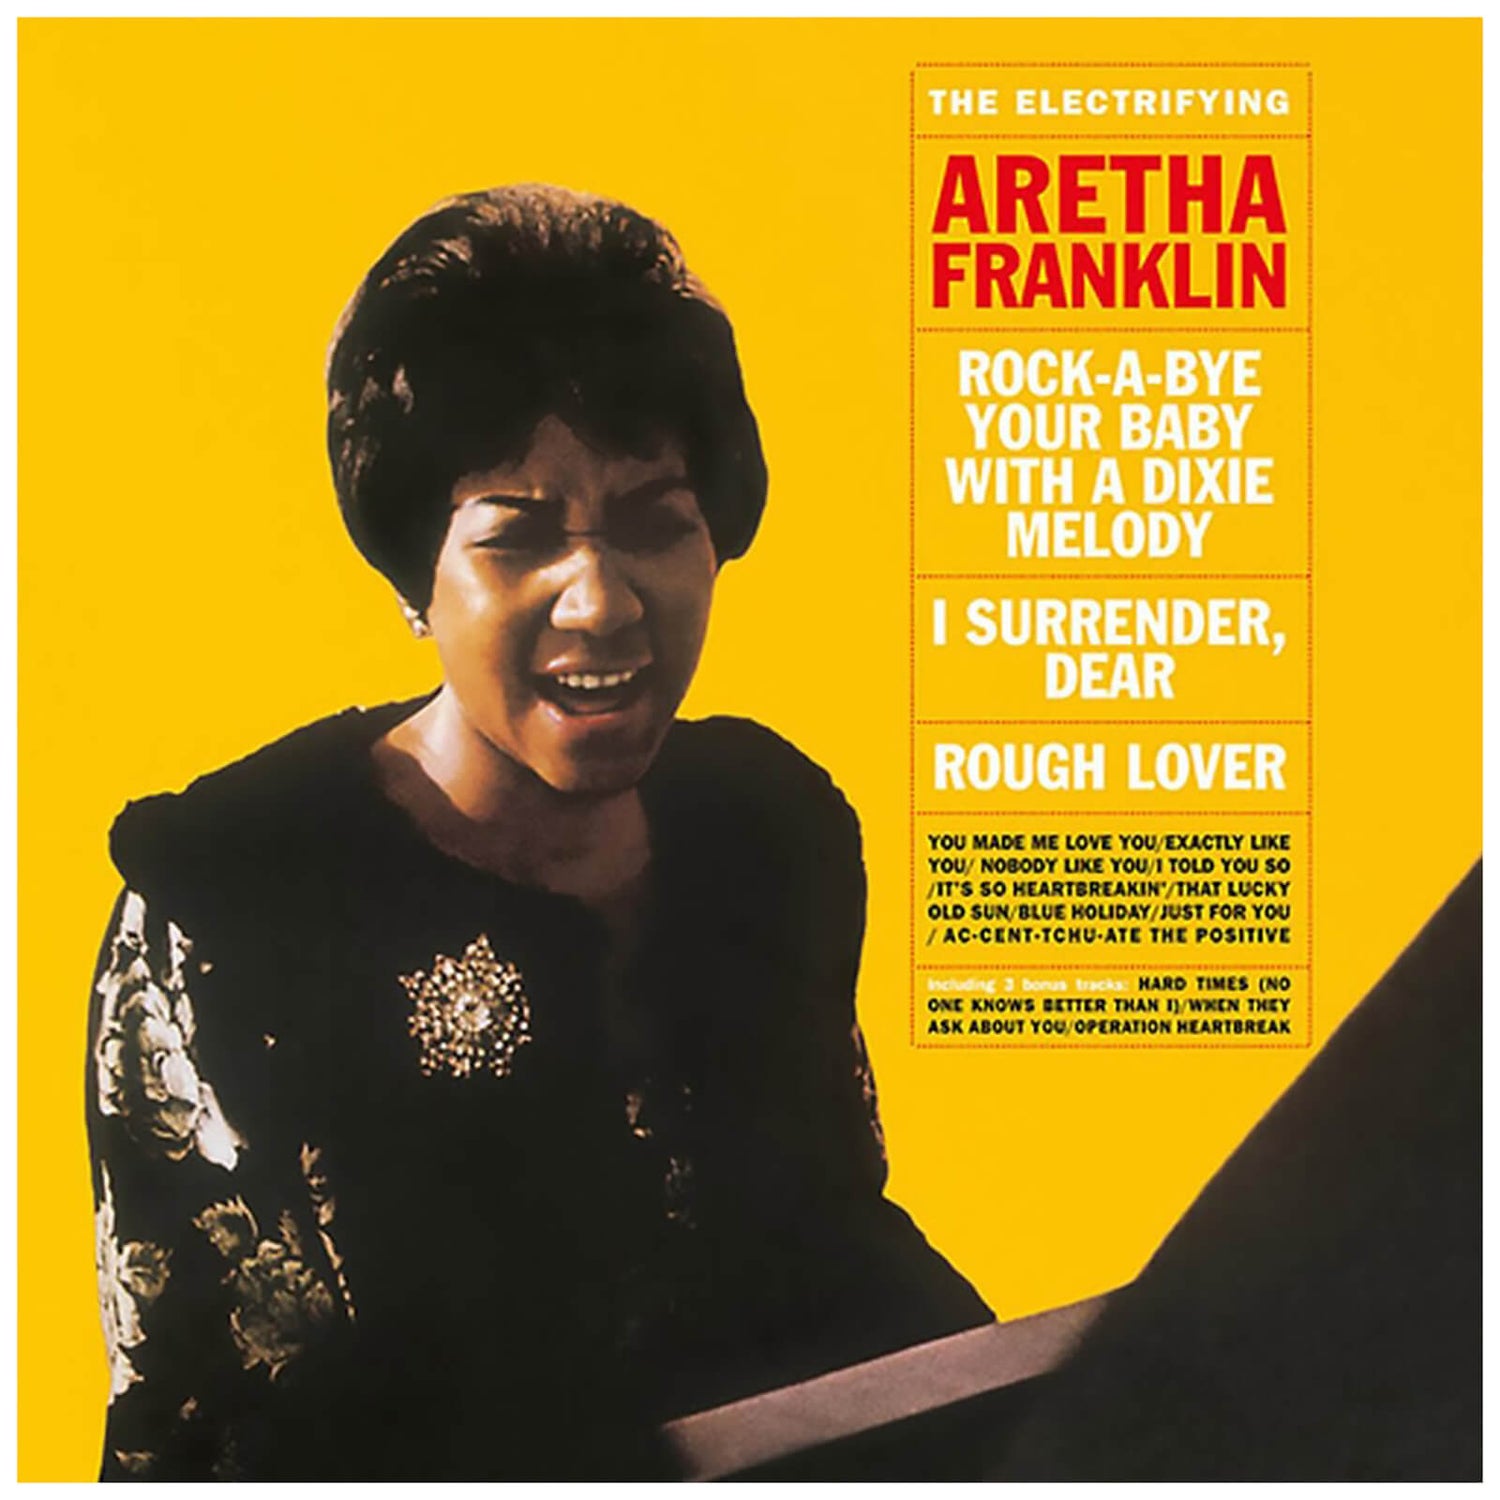 Aretha Franklin - The Electrifying Vinyl